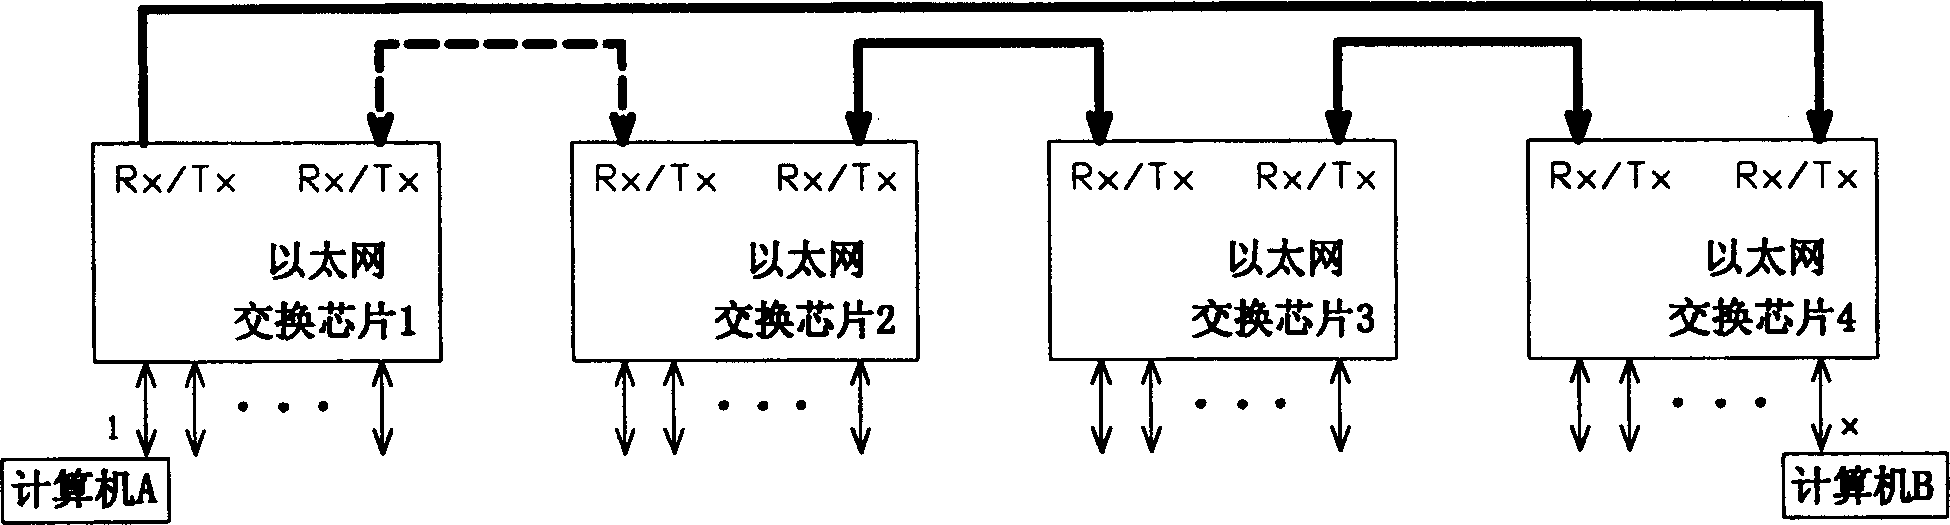 Stack speed process method in Ethernet exchanger